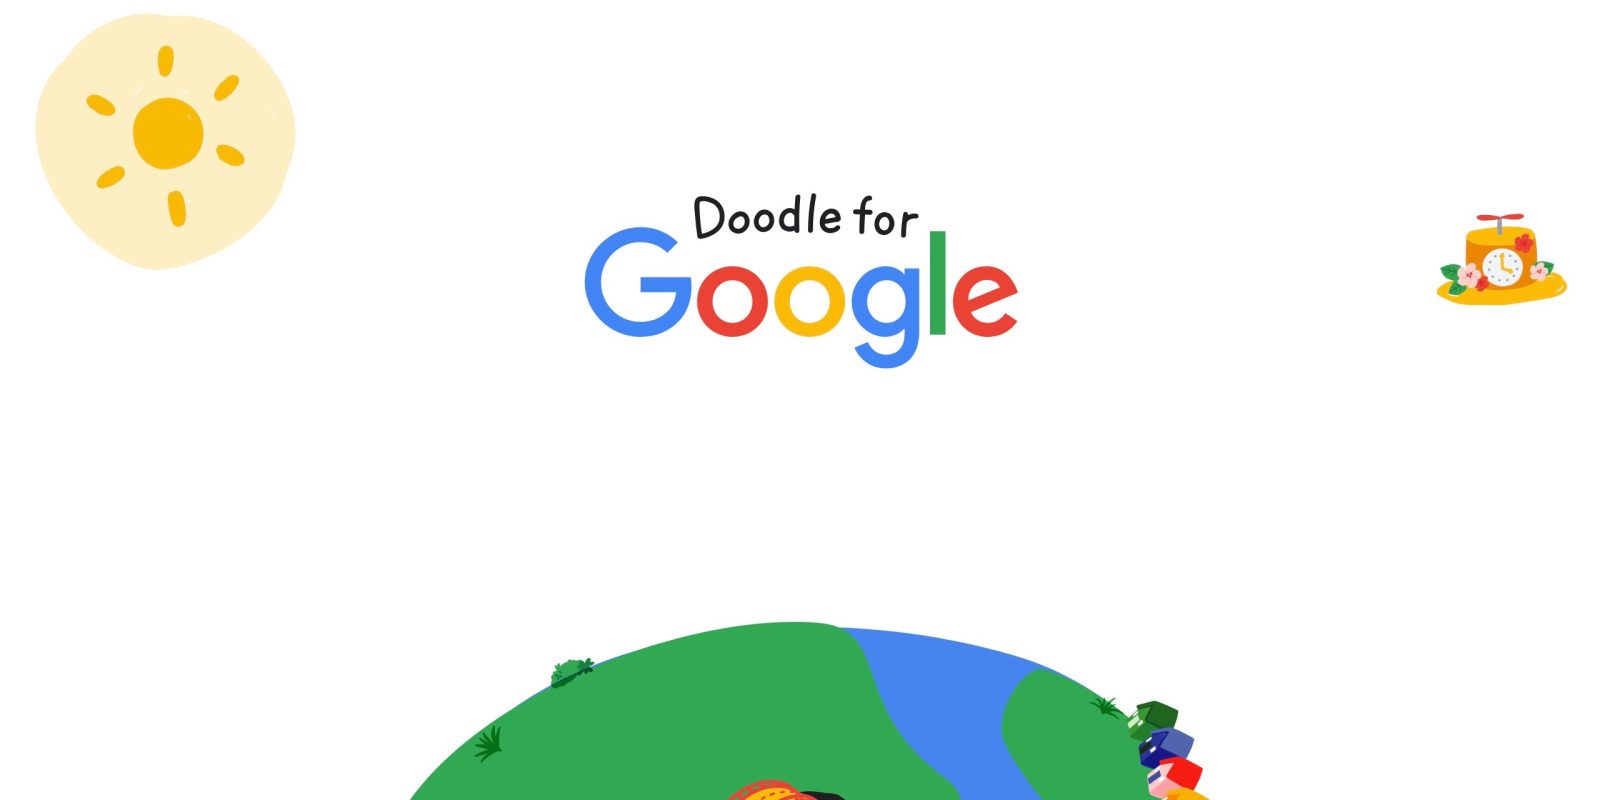 Doodle for Google 2019